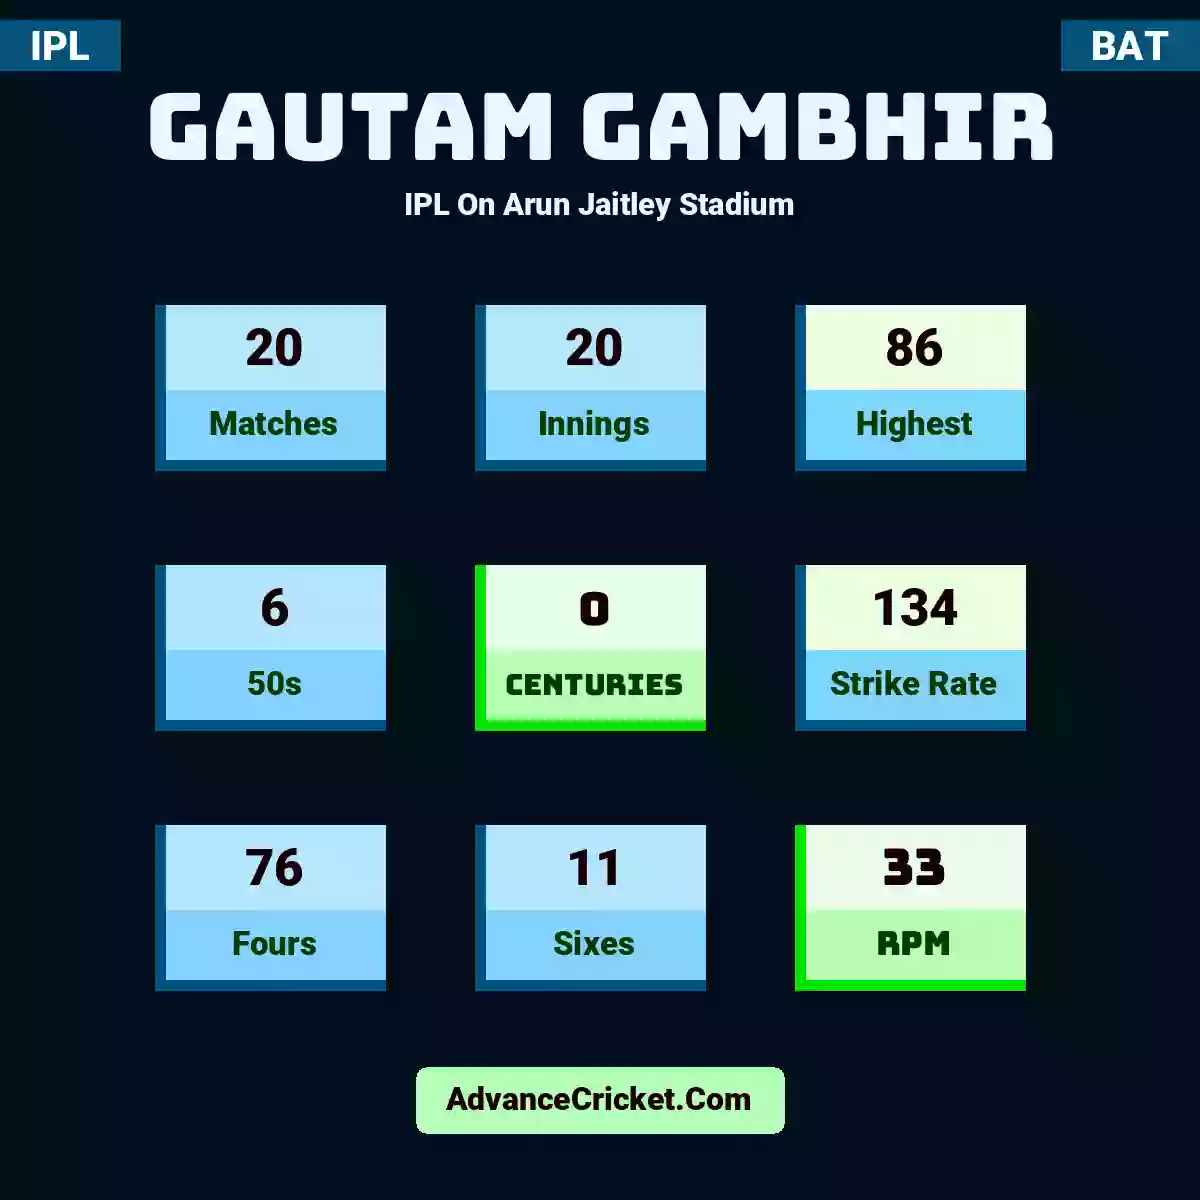 Gautam Gambhir IPL  On Arun Jaitley Stadium, Gautam Gambhir played 20 matches, scored 86 runs as highest, 6 half-centuries, and 0 centuries, with a strike rate of 134. G.Gambhir hit 76 fours and 11 sixes, with an RPM of 33.